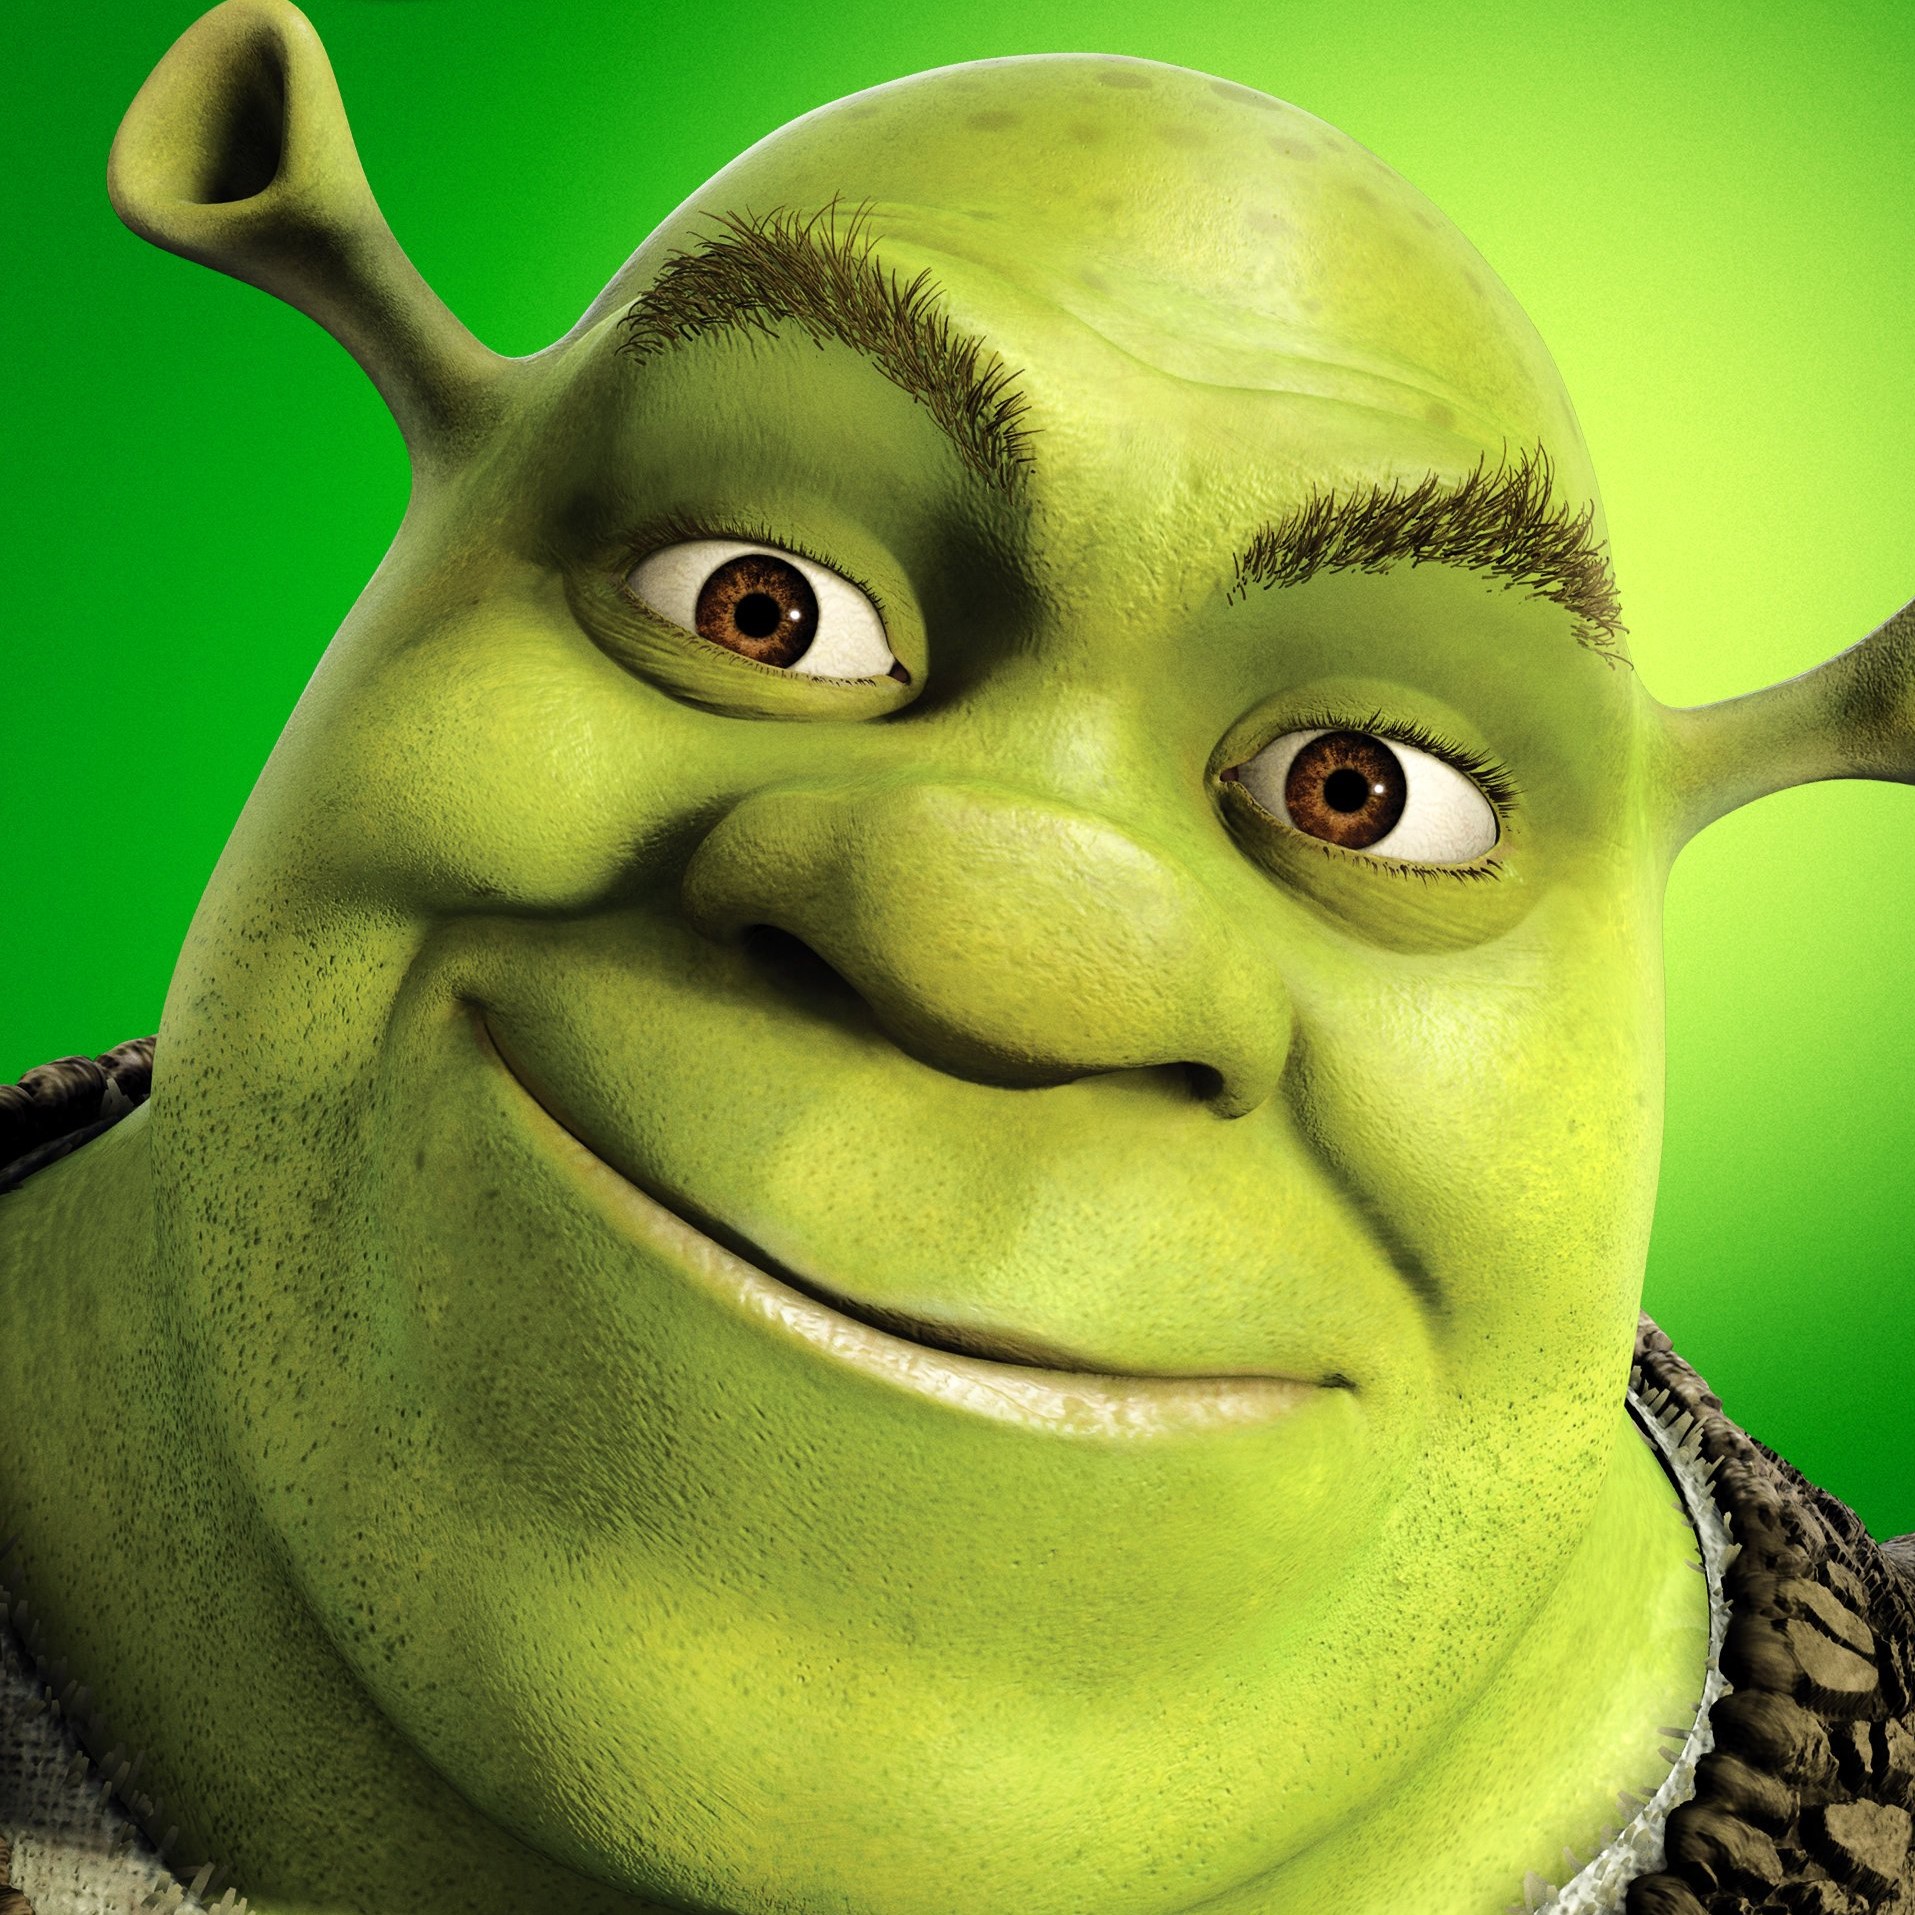 The Shrek soundtracks SLAP. 